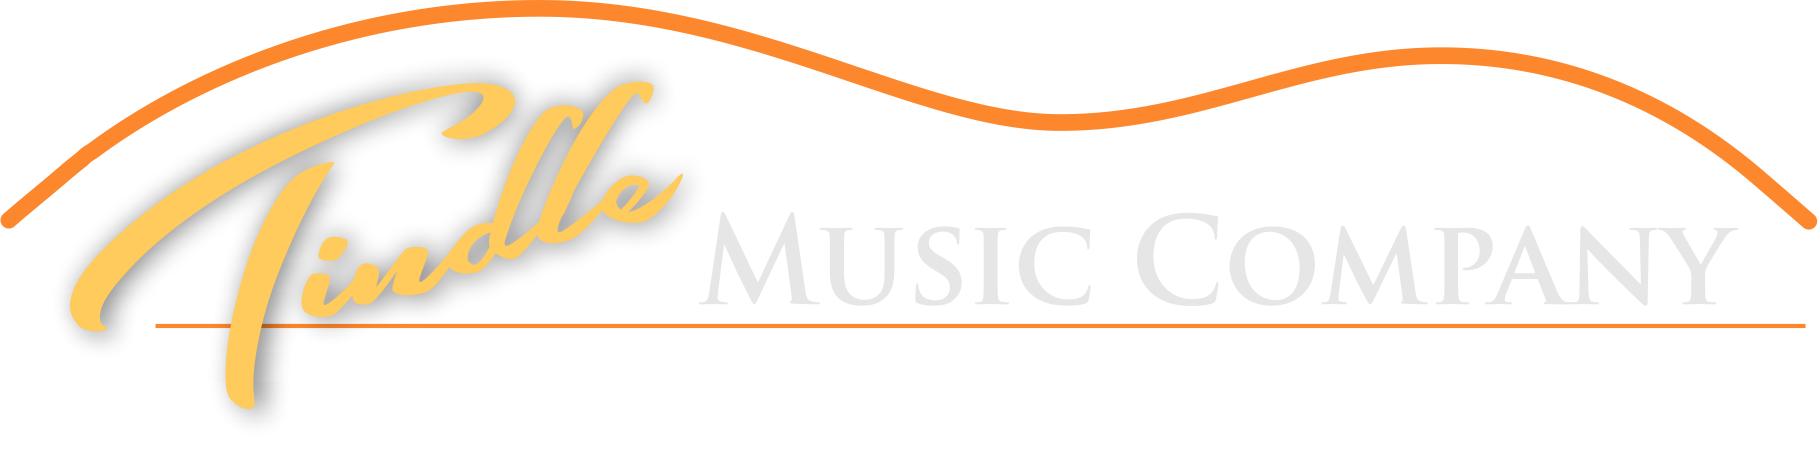 The Last Music Company, Ltd.